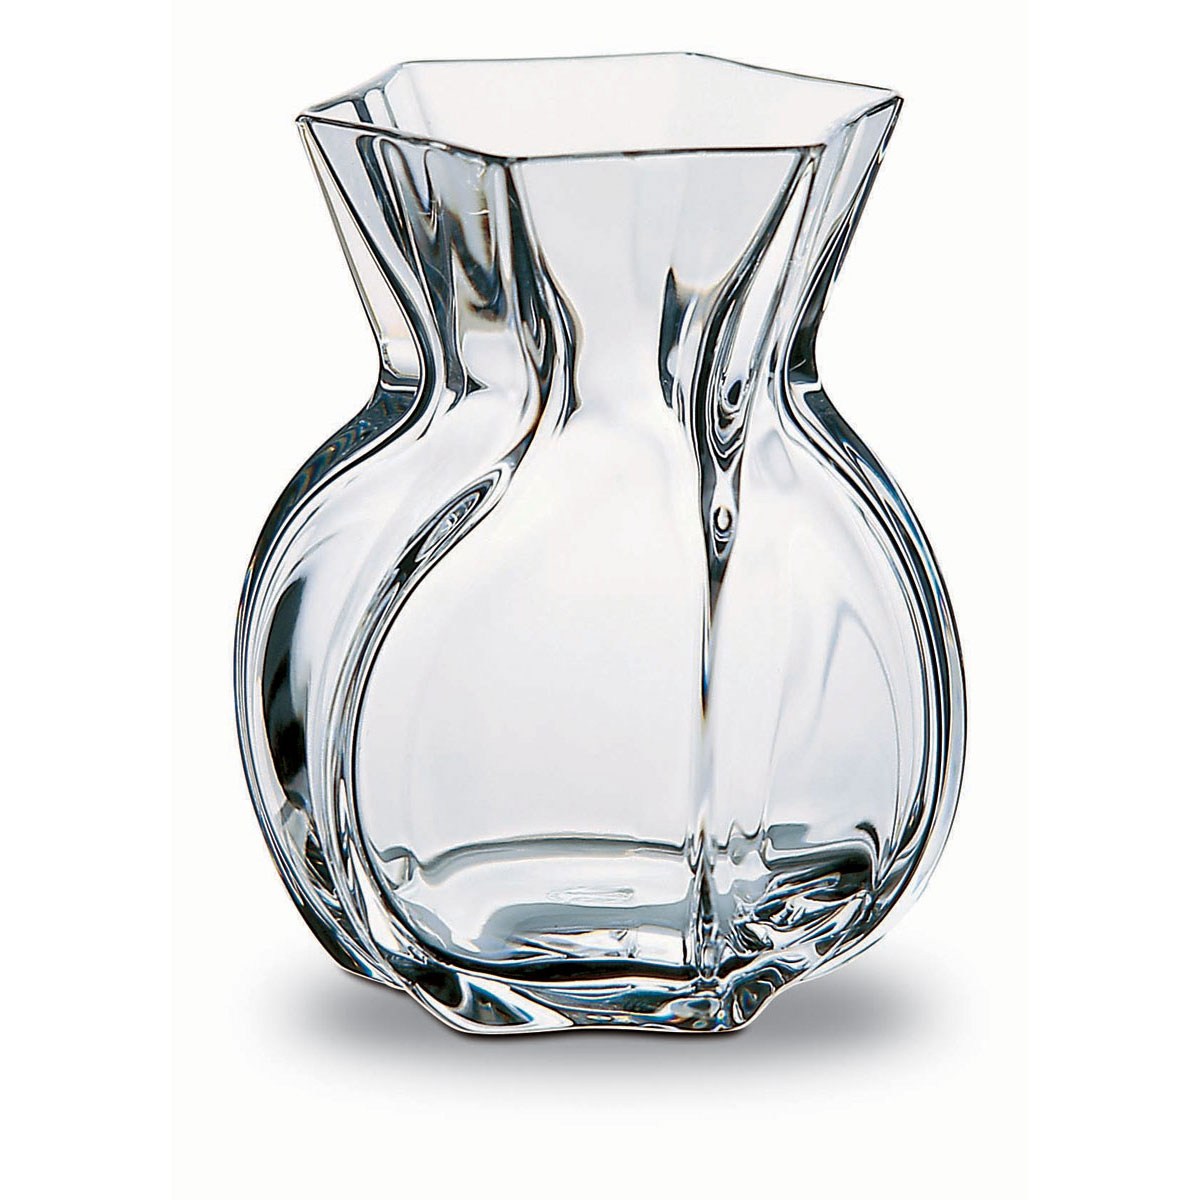 Baccarat Crystal, Corolle Crystal Vase